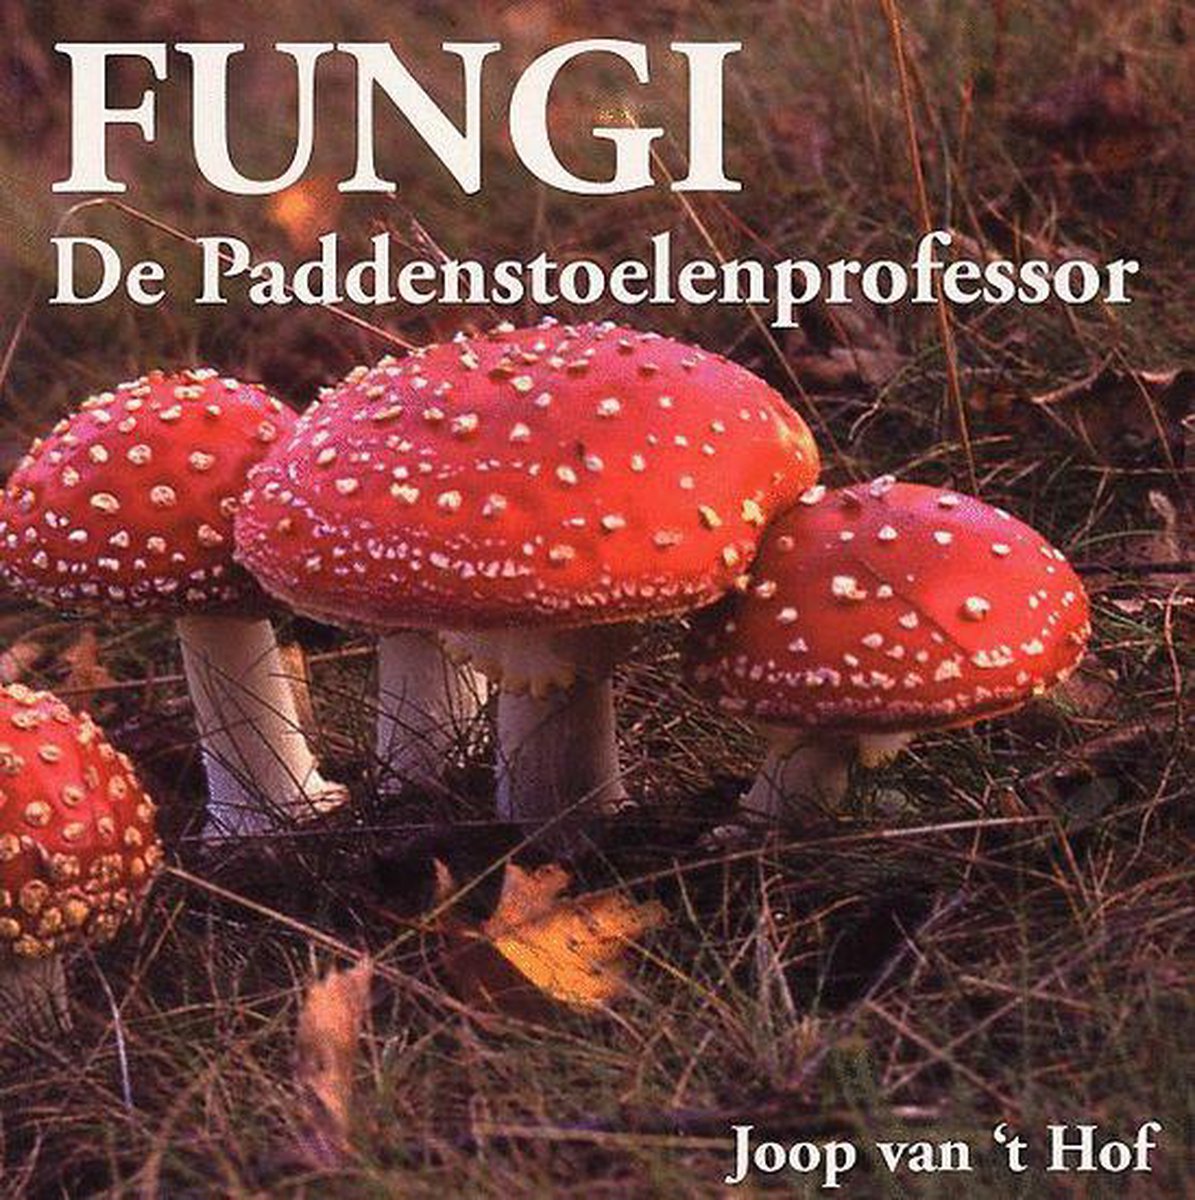 Fungi, De Paddenstoelenprofessor